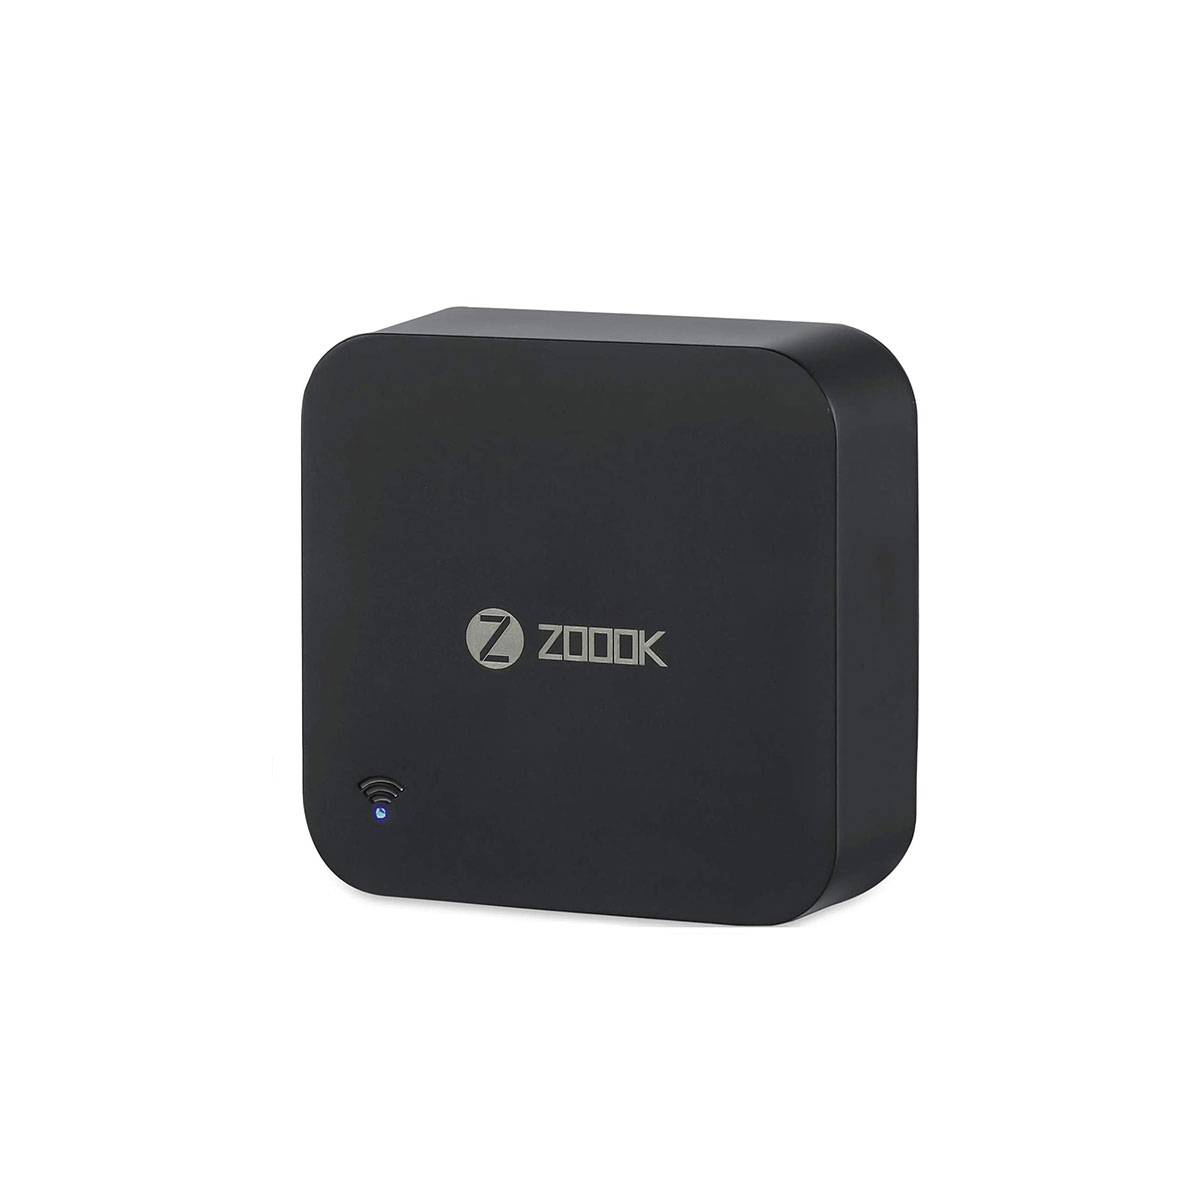 Zoook Clicker Wi-Fi Smart Home Universal Remote with Amazon Alexa | Remote for Air Conditioner | TV | DTH |Home Theatre